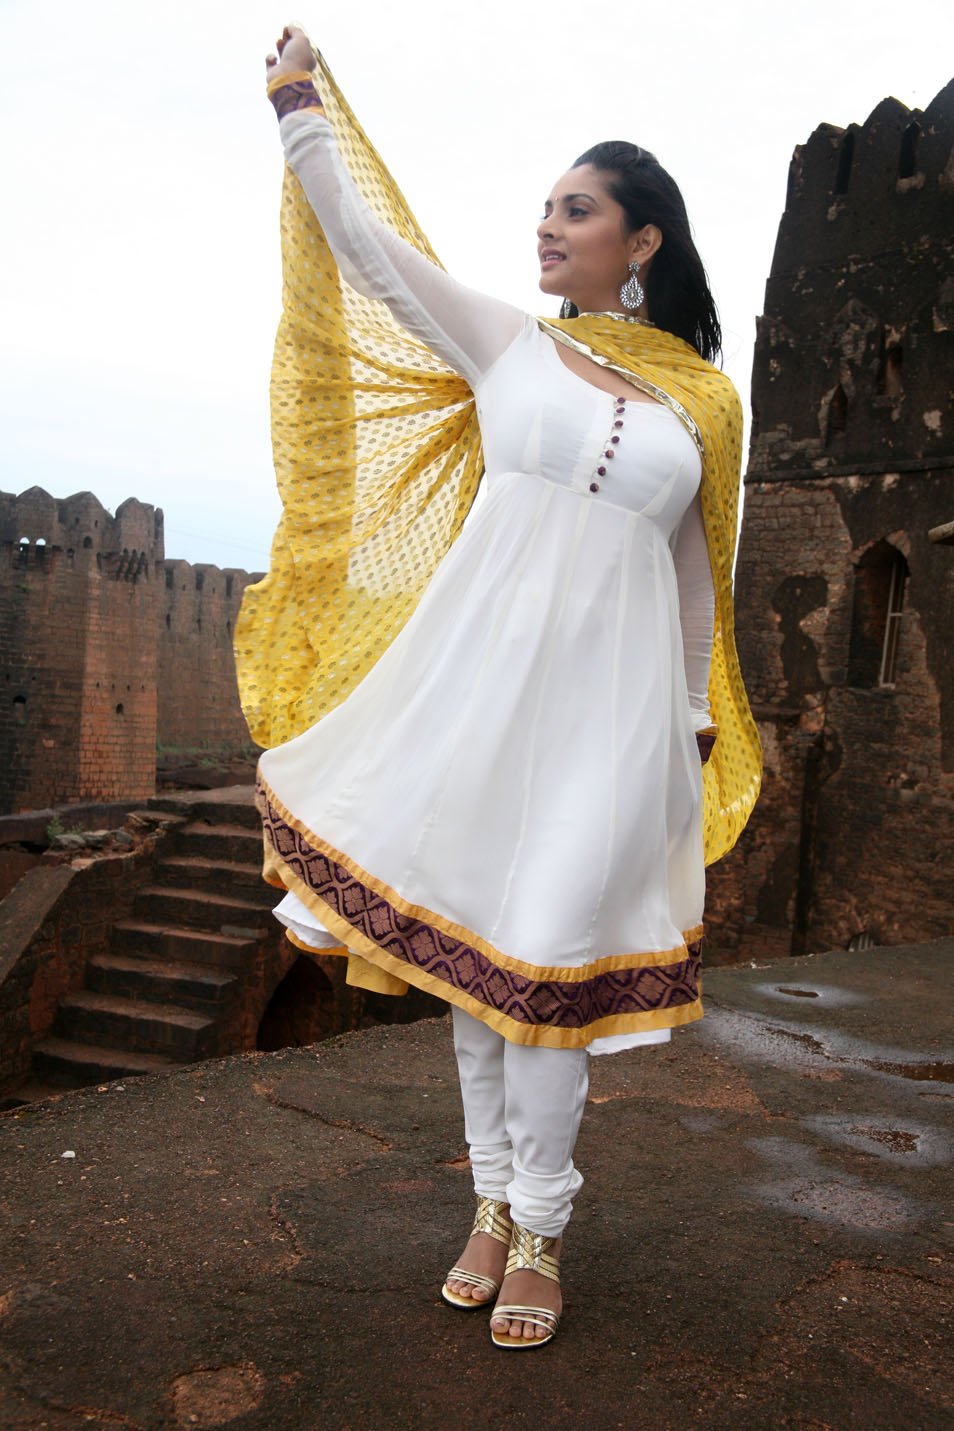 Actress Divya Spandana aka Ramya Hot Photo Stills